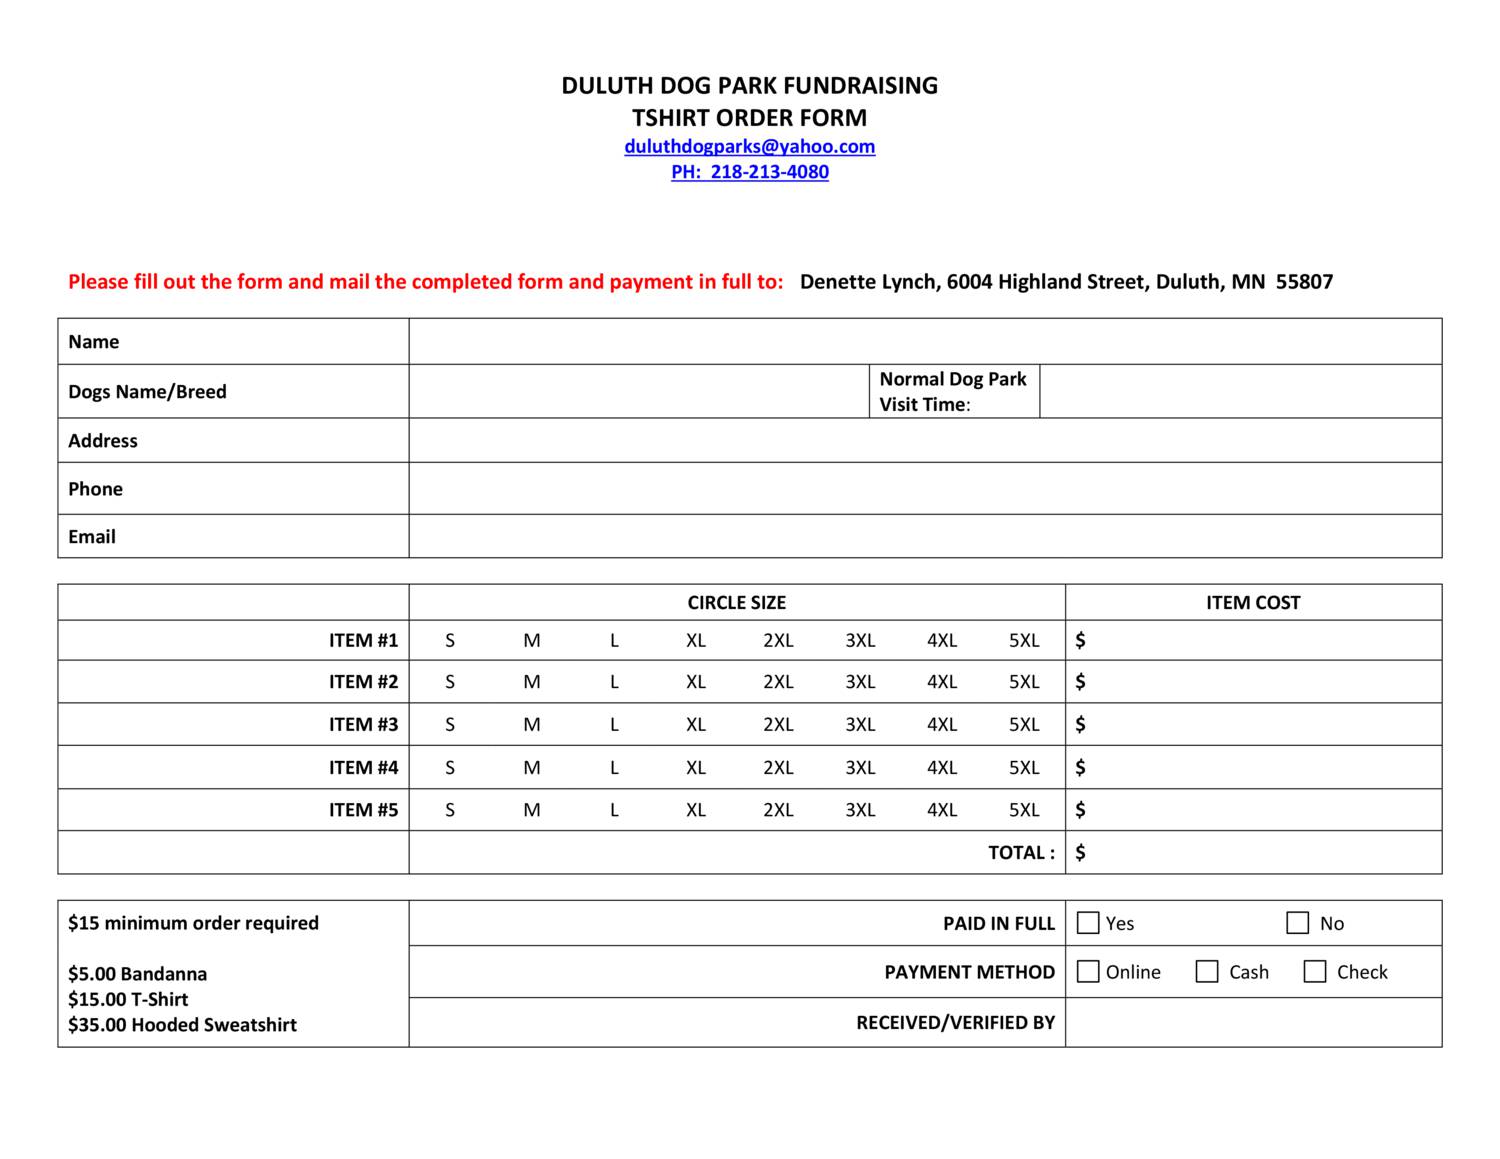 Duluth Dog Park Fundraising Order Form.pdf DocDroid